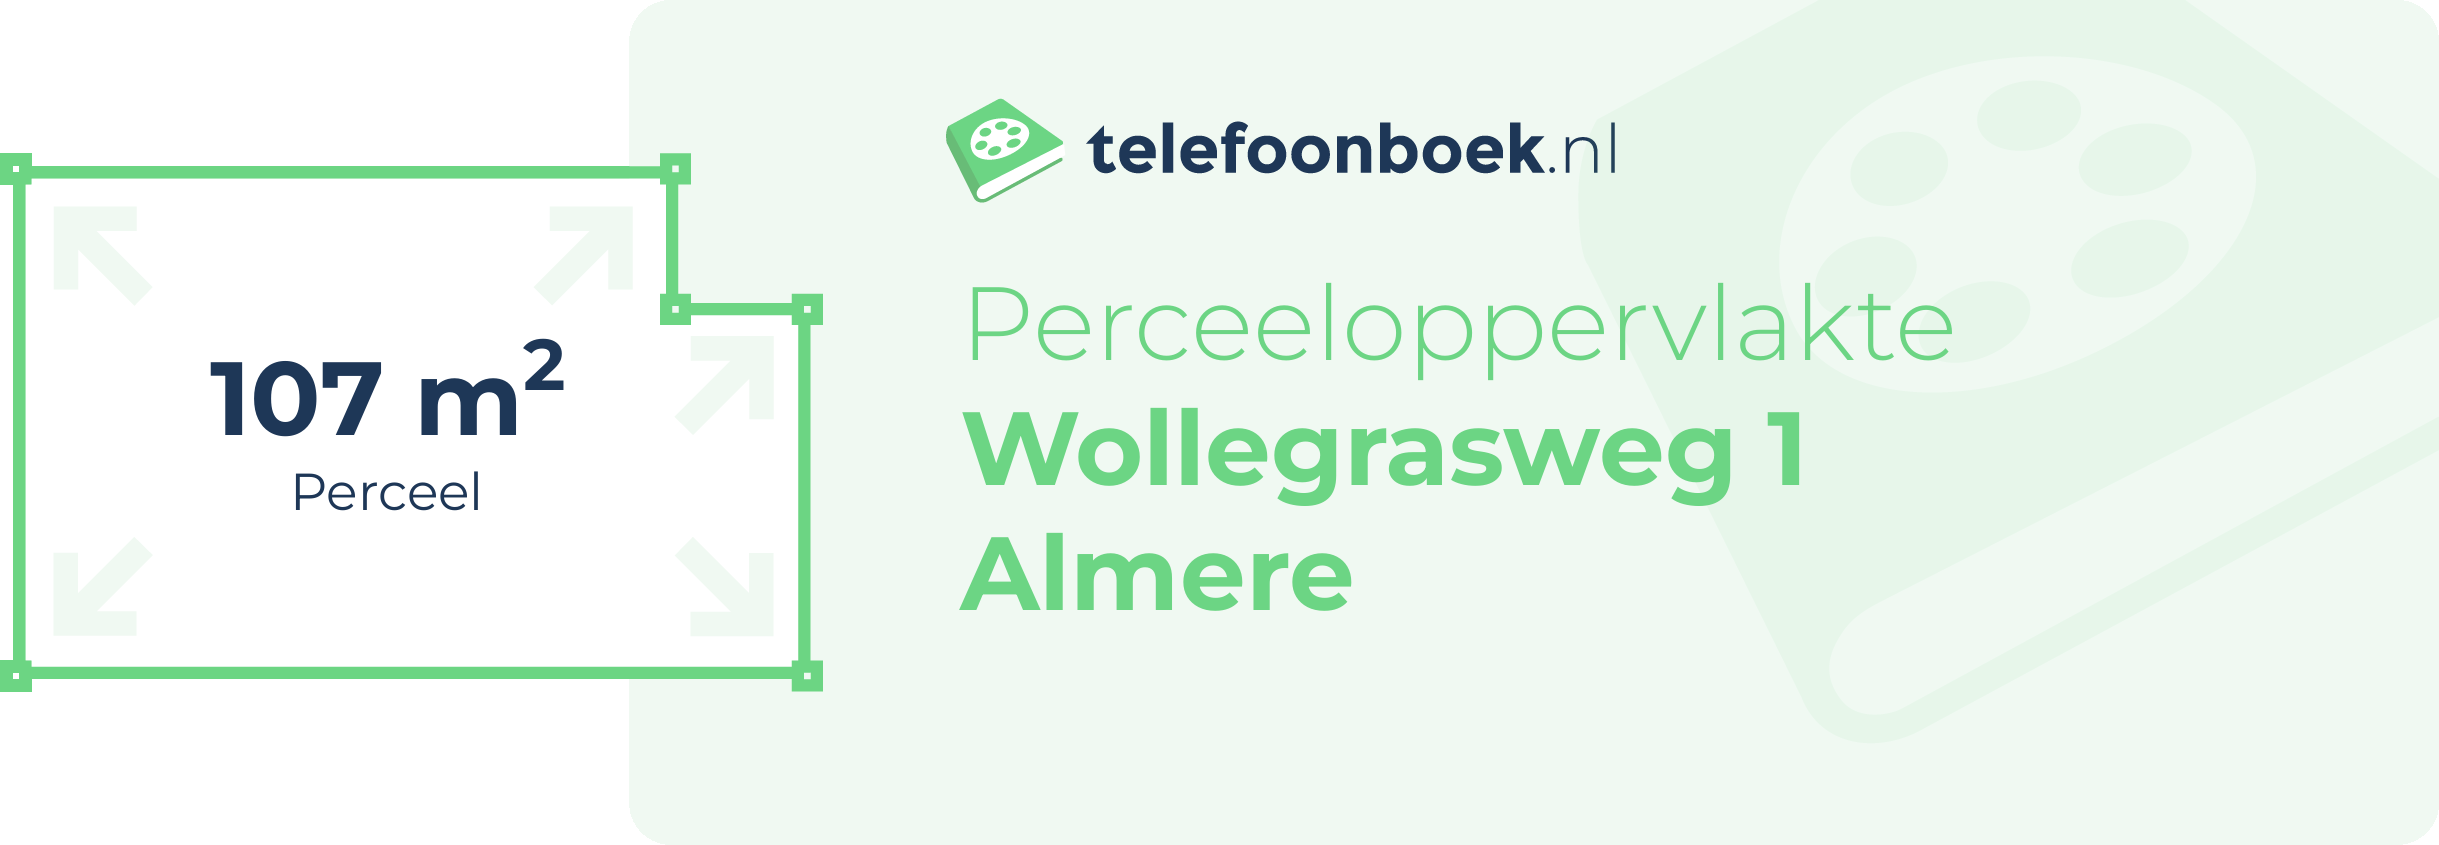 Perceeloppervlakte Wollegrasweg 1 Almere